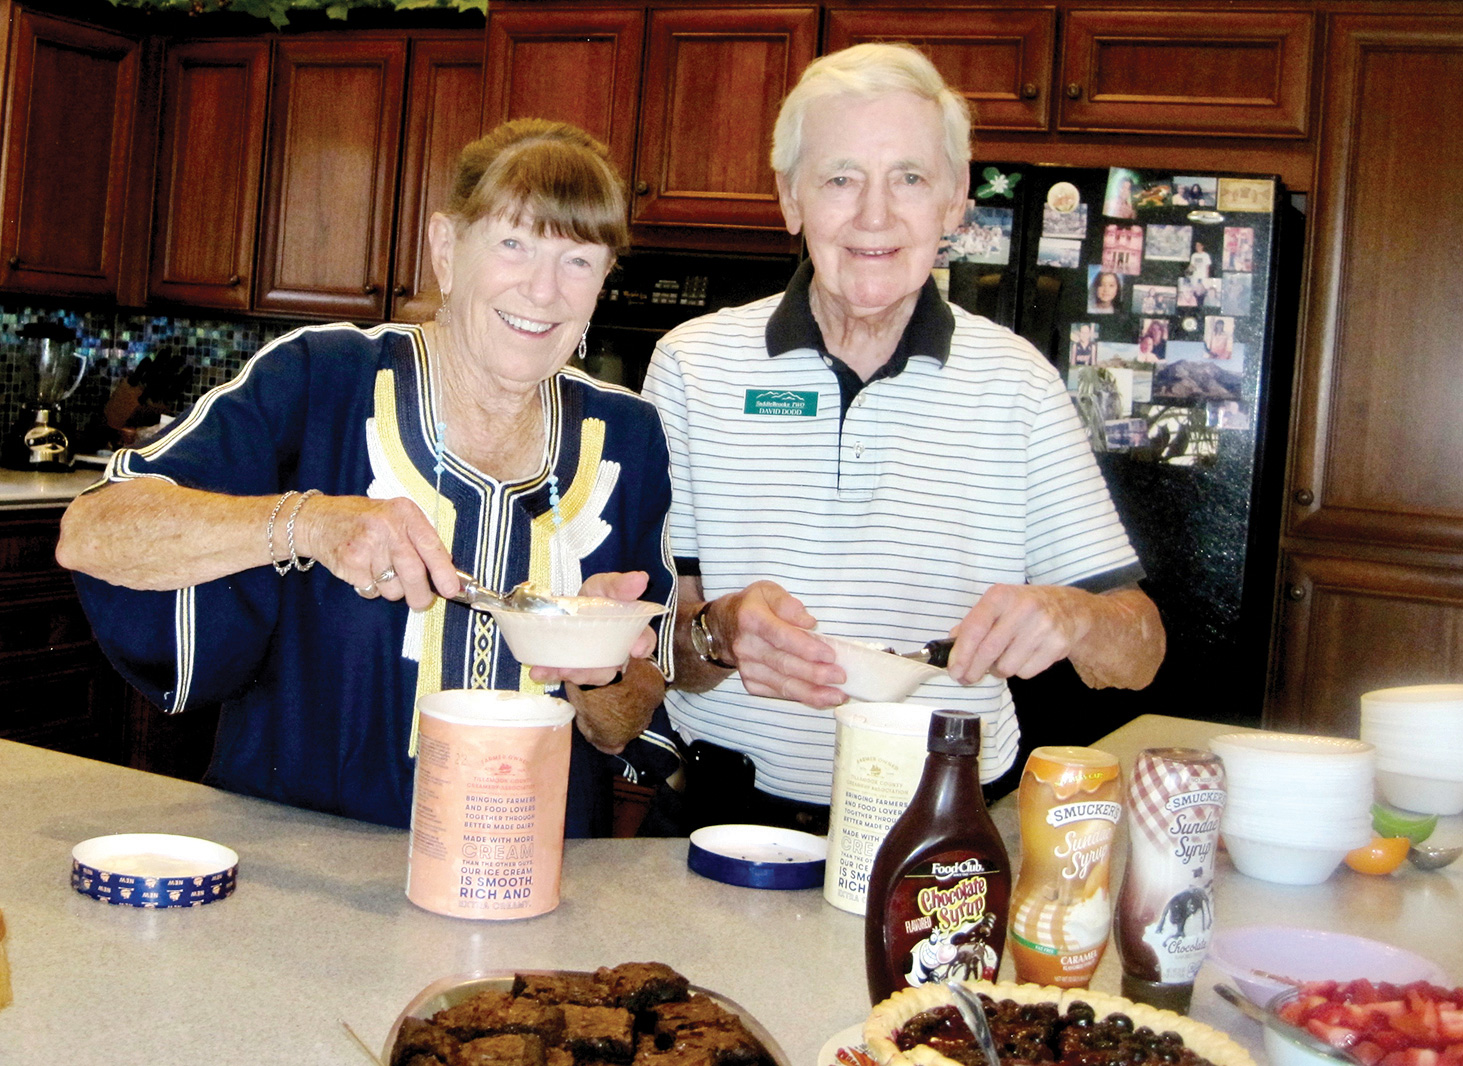 Arlene DesJardins and David Dodd serving up dishes of ice cream